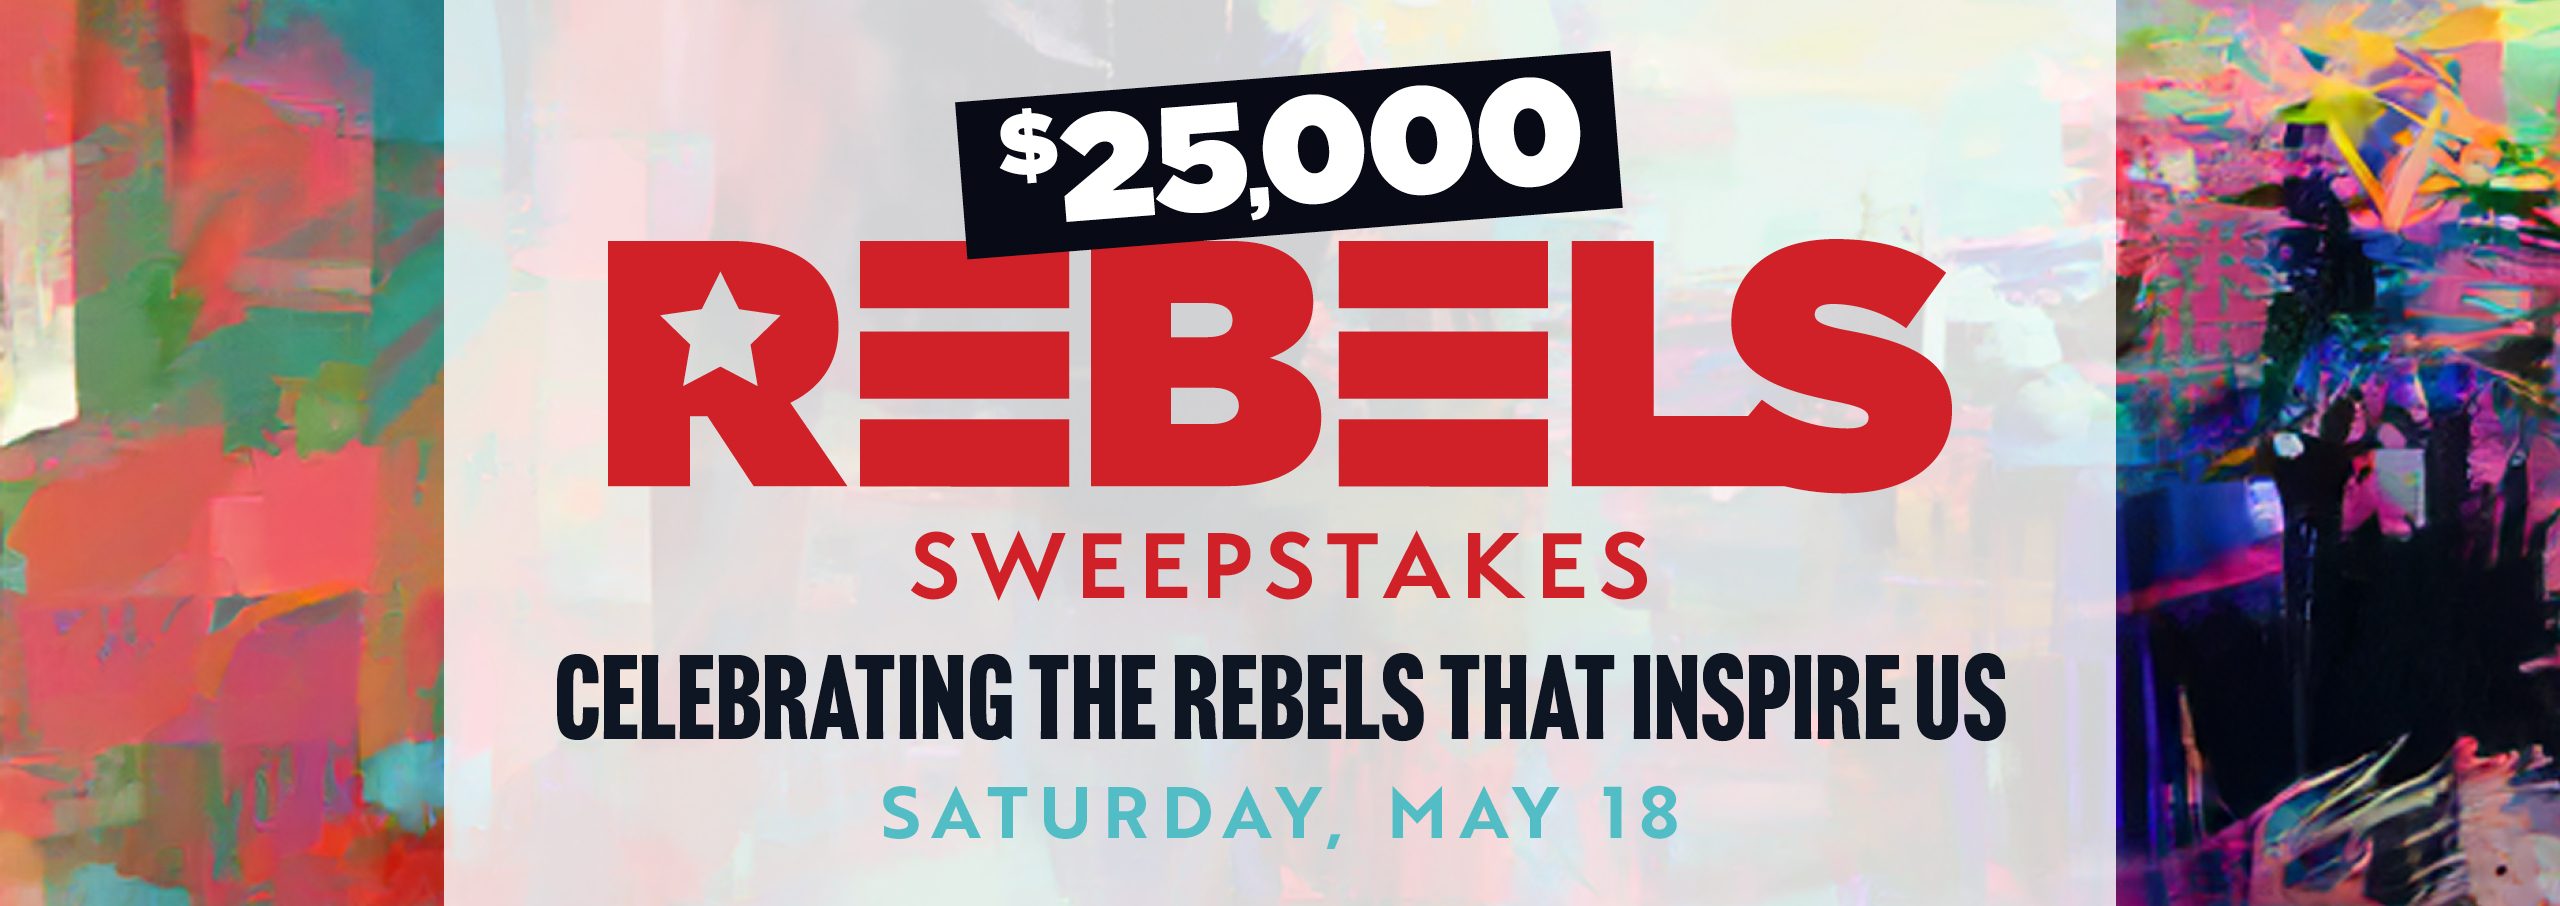 $25,000 Rebels Sweepstakes